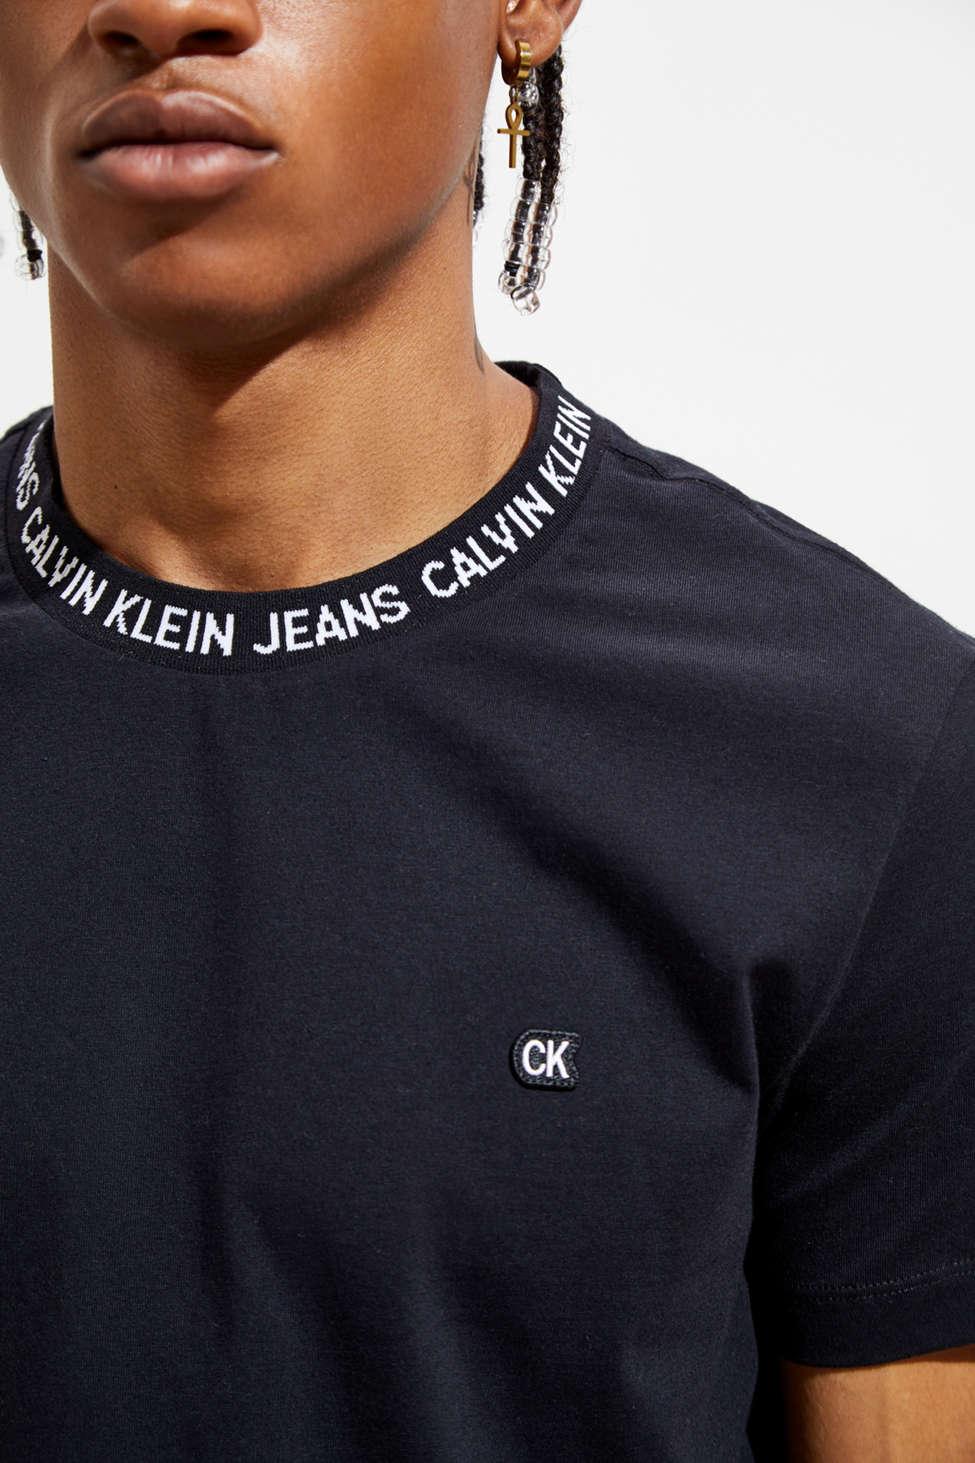 Calvin Klein Cotton Calvin Klein Logo Collar Tee in Blue for Men - Lyst